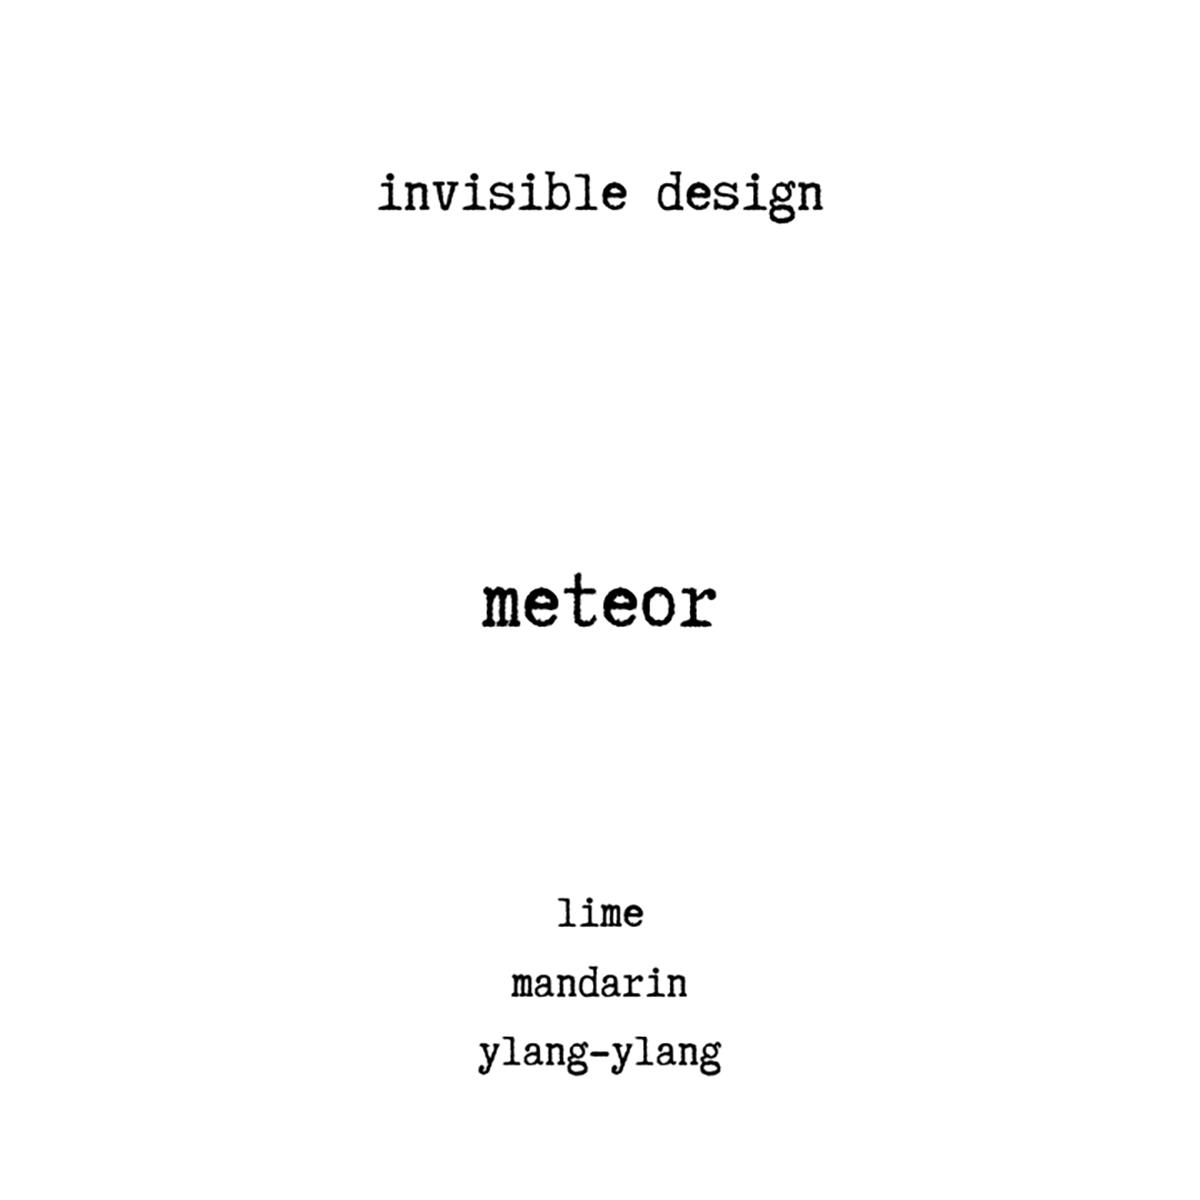 meteor_invisible-design_jk_20230315.jpg